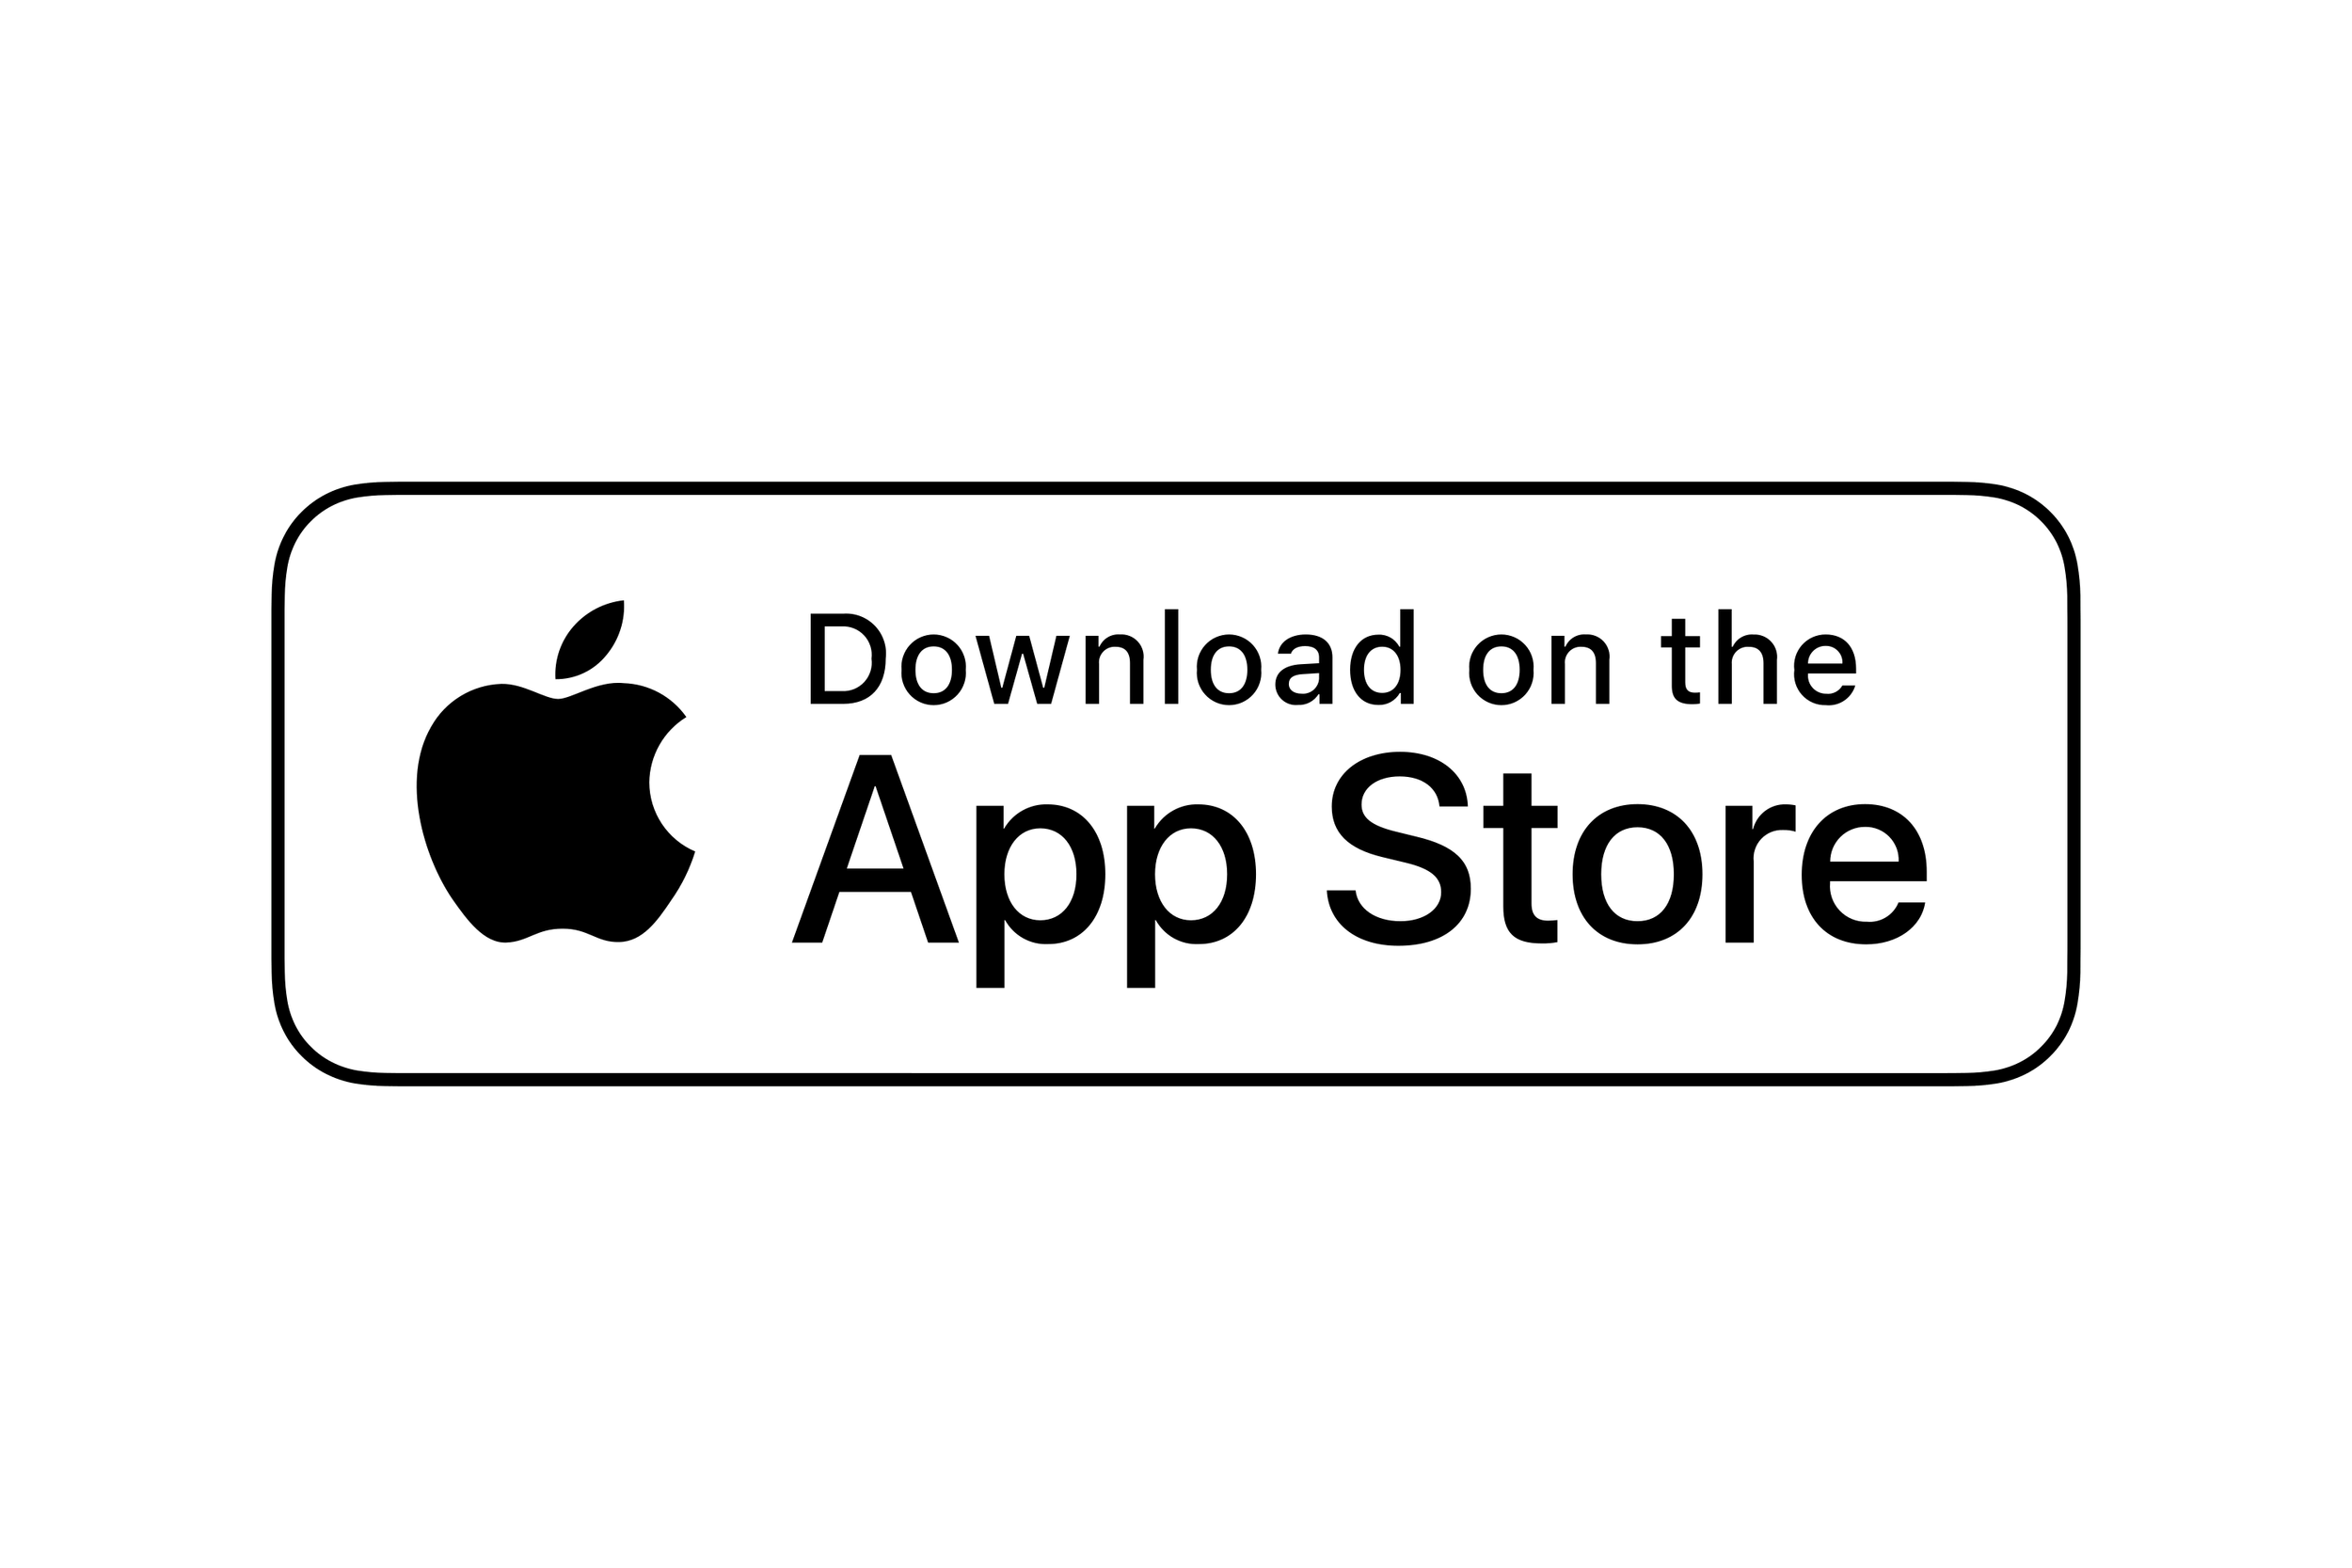 Available на английский. Apple Store приложение. Логотип app Store. Apple Store логотип. Доступно в Apple Store.